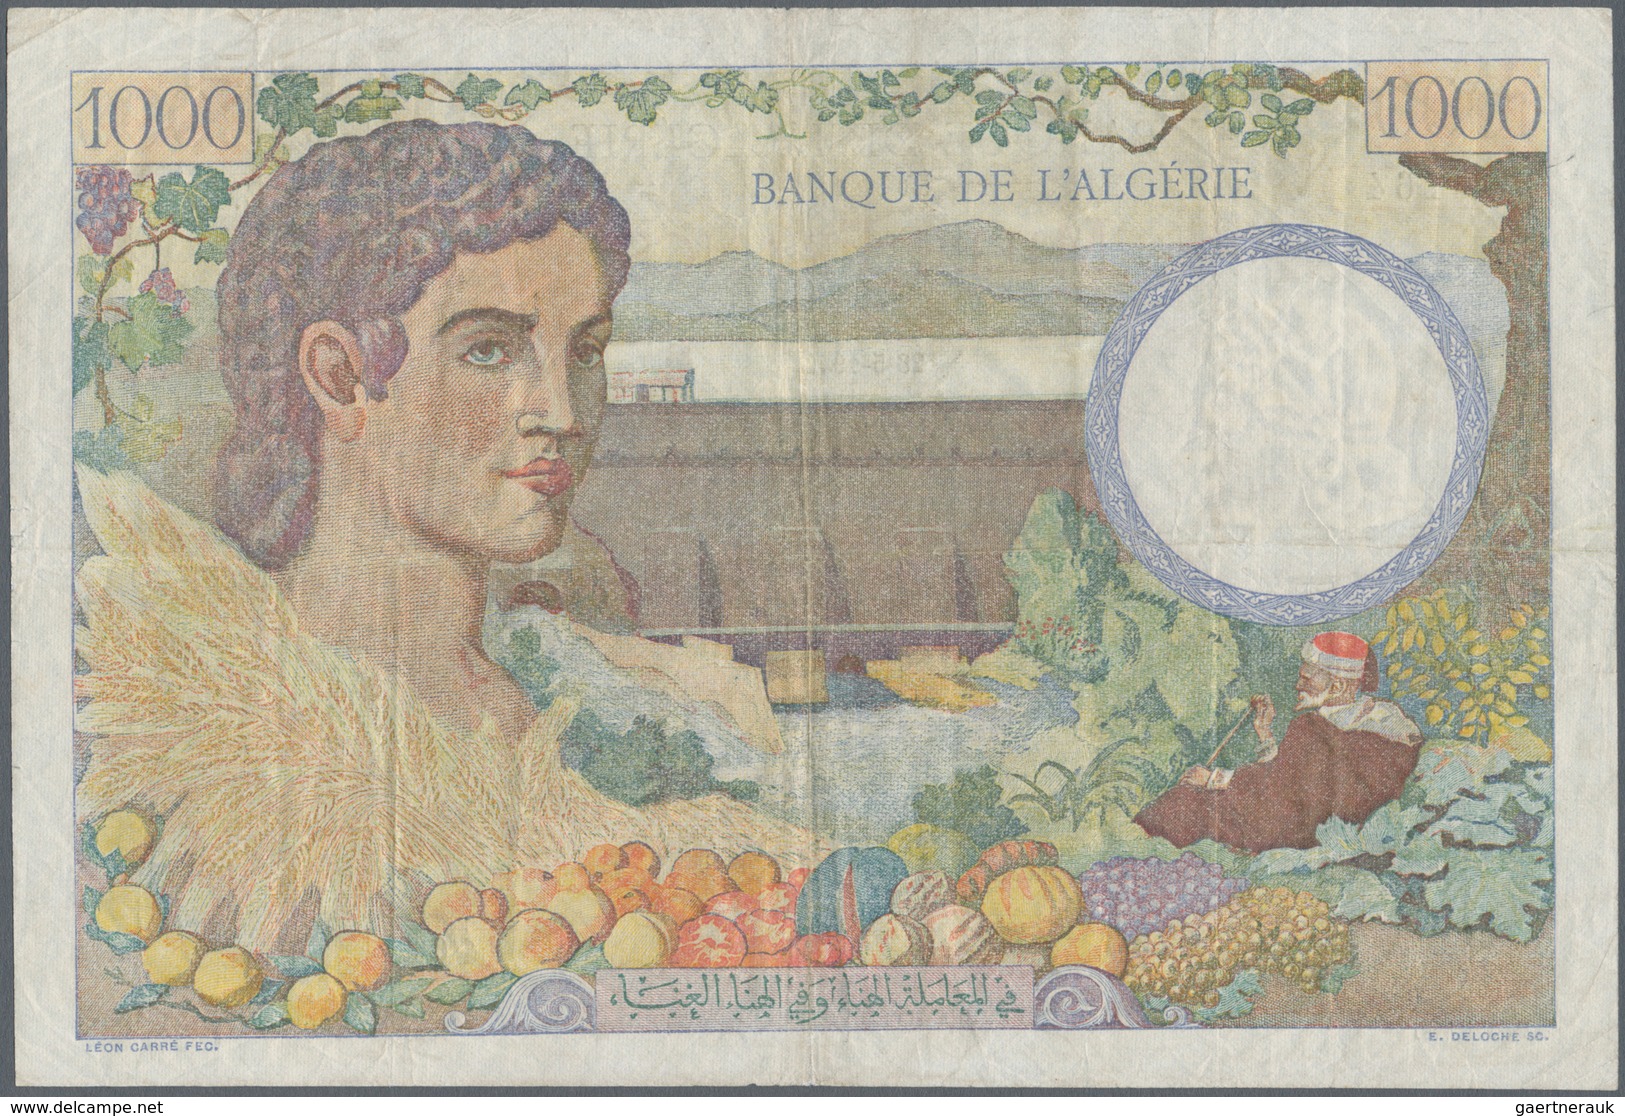 Algeria / Algerien: 1000 Francs 1941 P. 86, S/N 3052164 C.123, Banque De L'Algerie, Watermark Woman' - Algeria